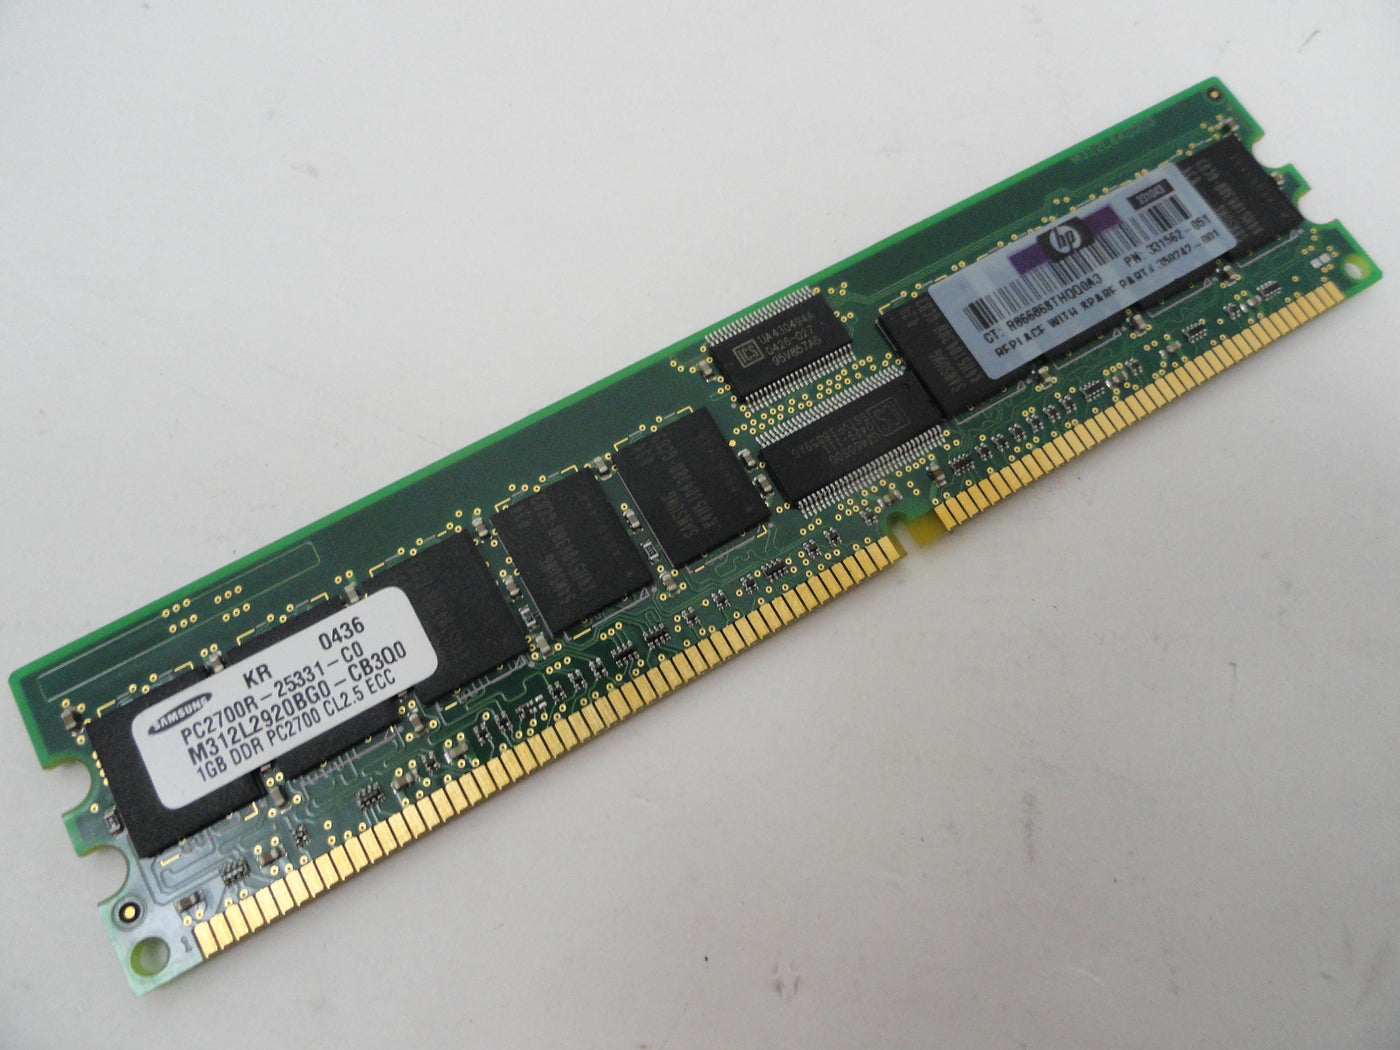 PR16960_PC2700-25331-C0_Samsung HP 1Gb DDR-333 PC2700 CL2.5 ECC RAM Module - Image3